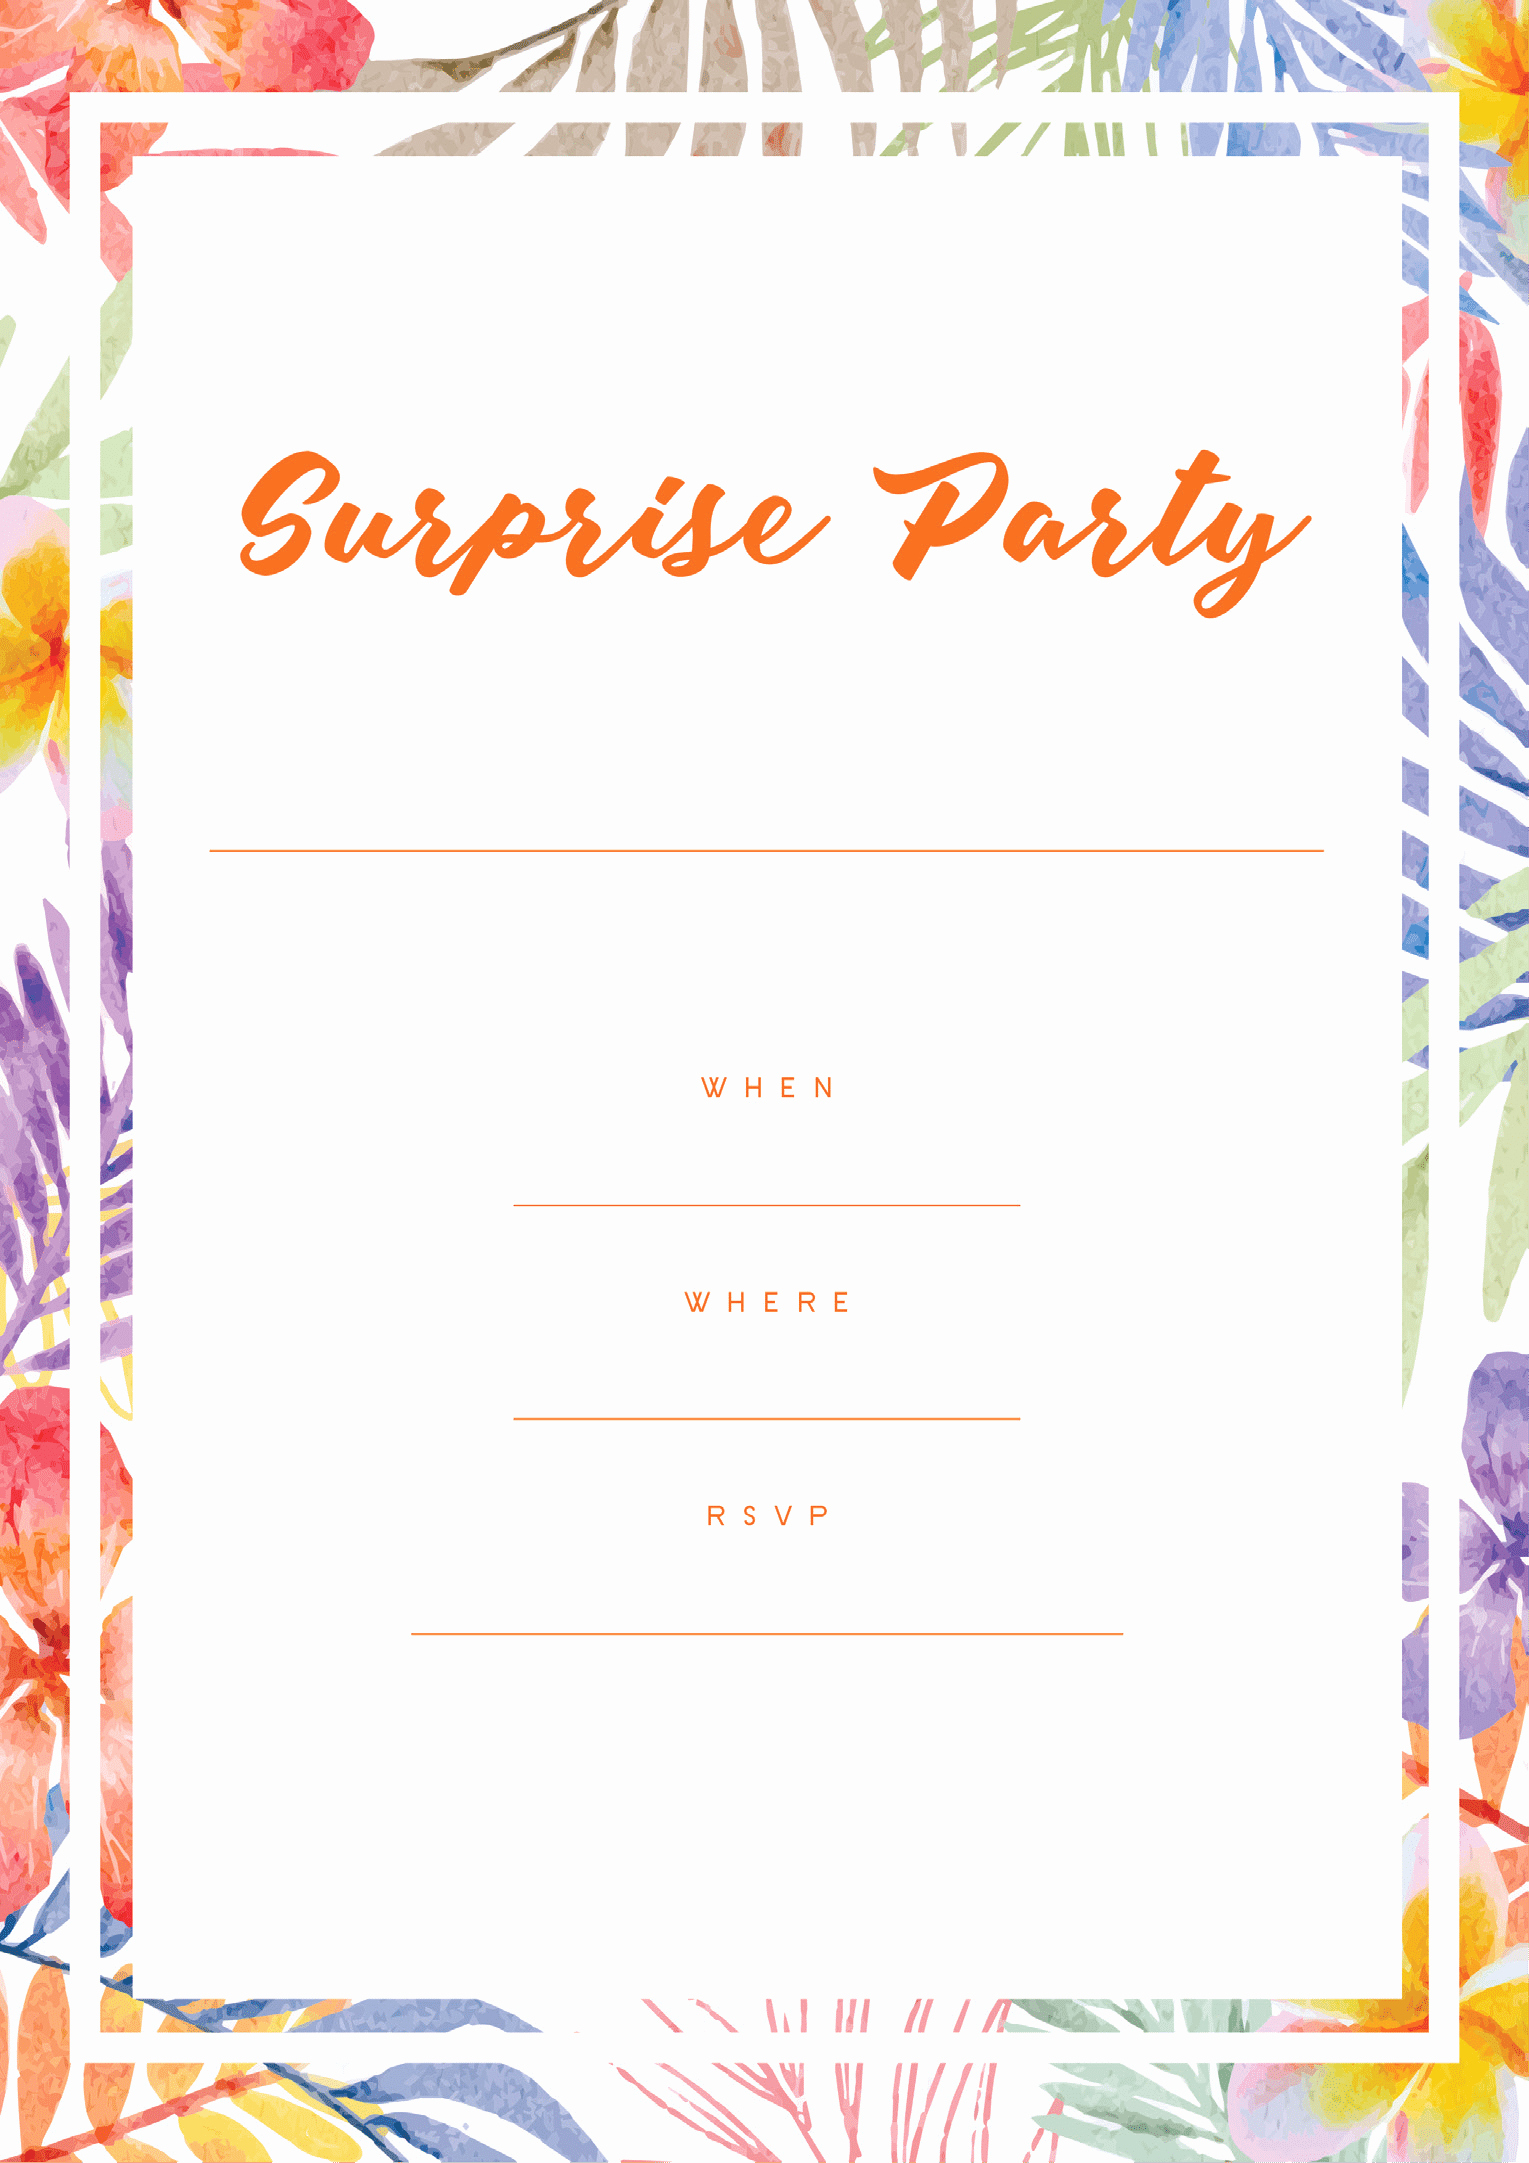 Free Surprise Party Invitations Unique Free Surprise Party Invitations All Free Invitations